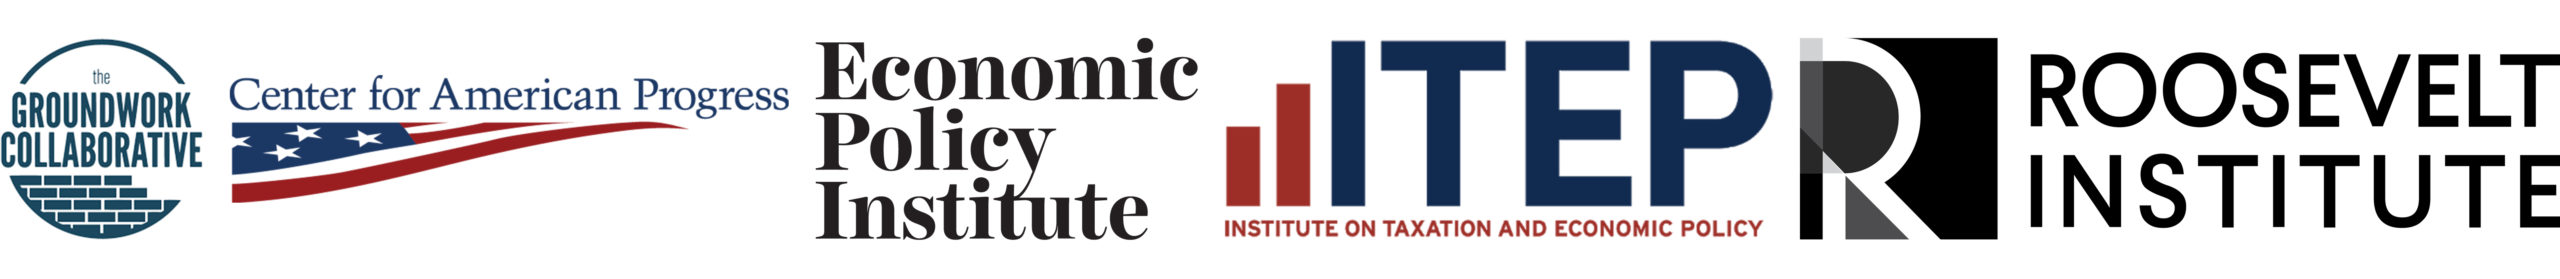 Logos for Groundwork Collaborative, Center for American Progress, Economic Policy Institute, Institute on Taxation and Economic Policy, and Roosevelt Institute